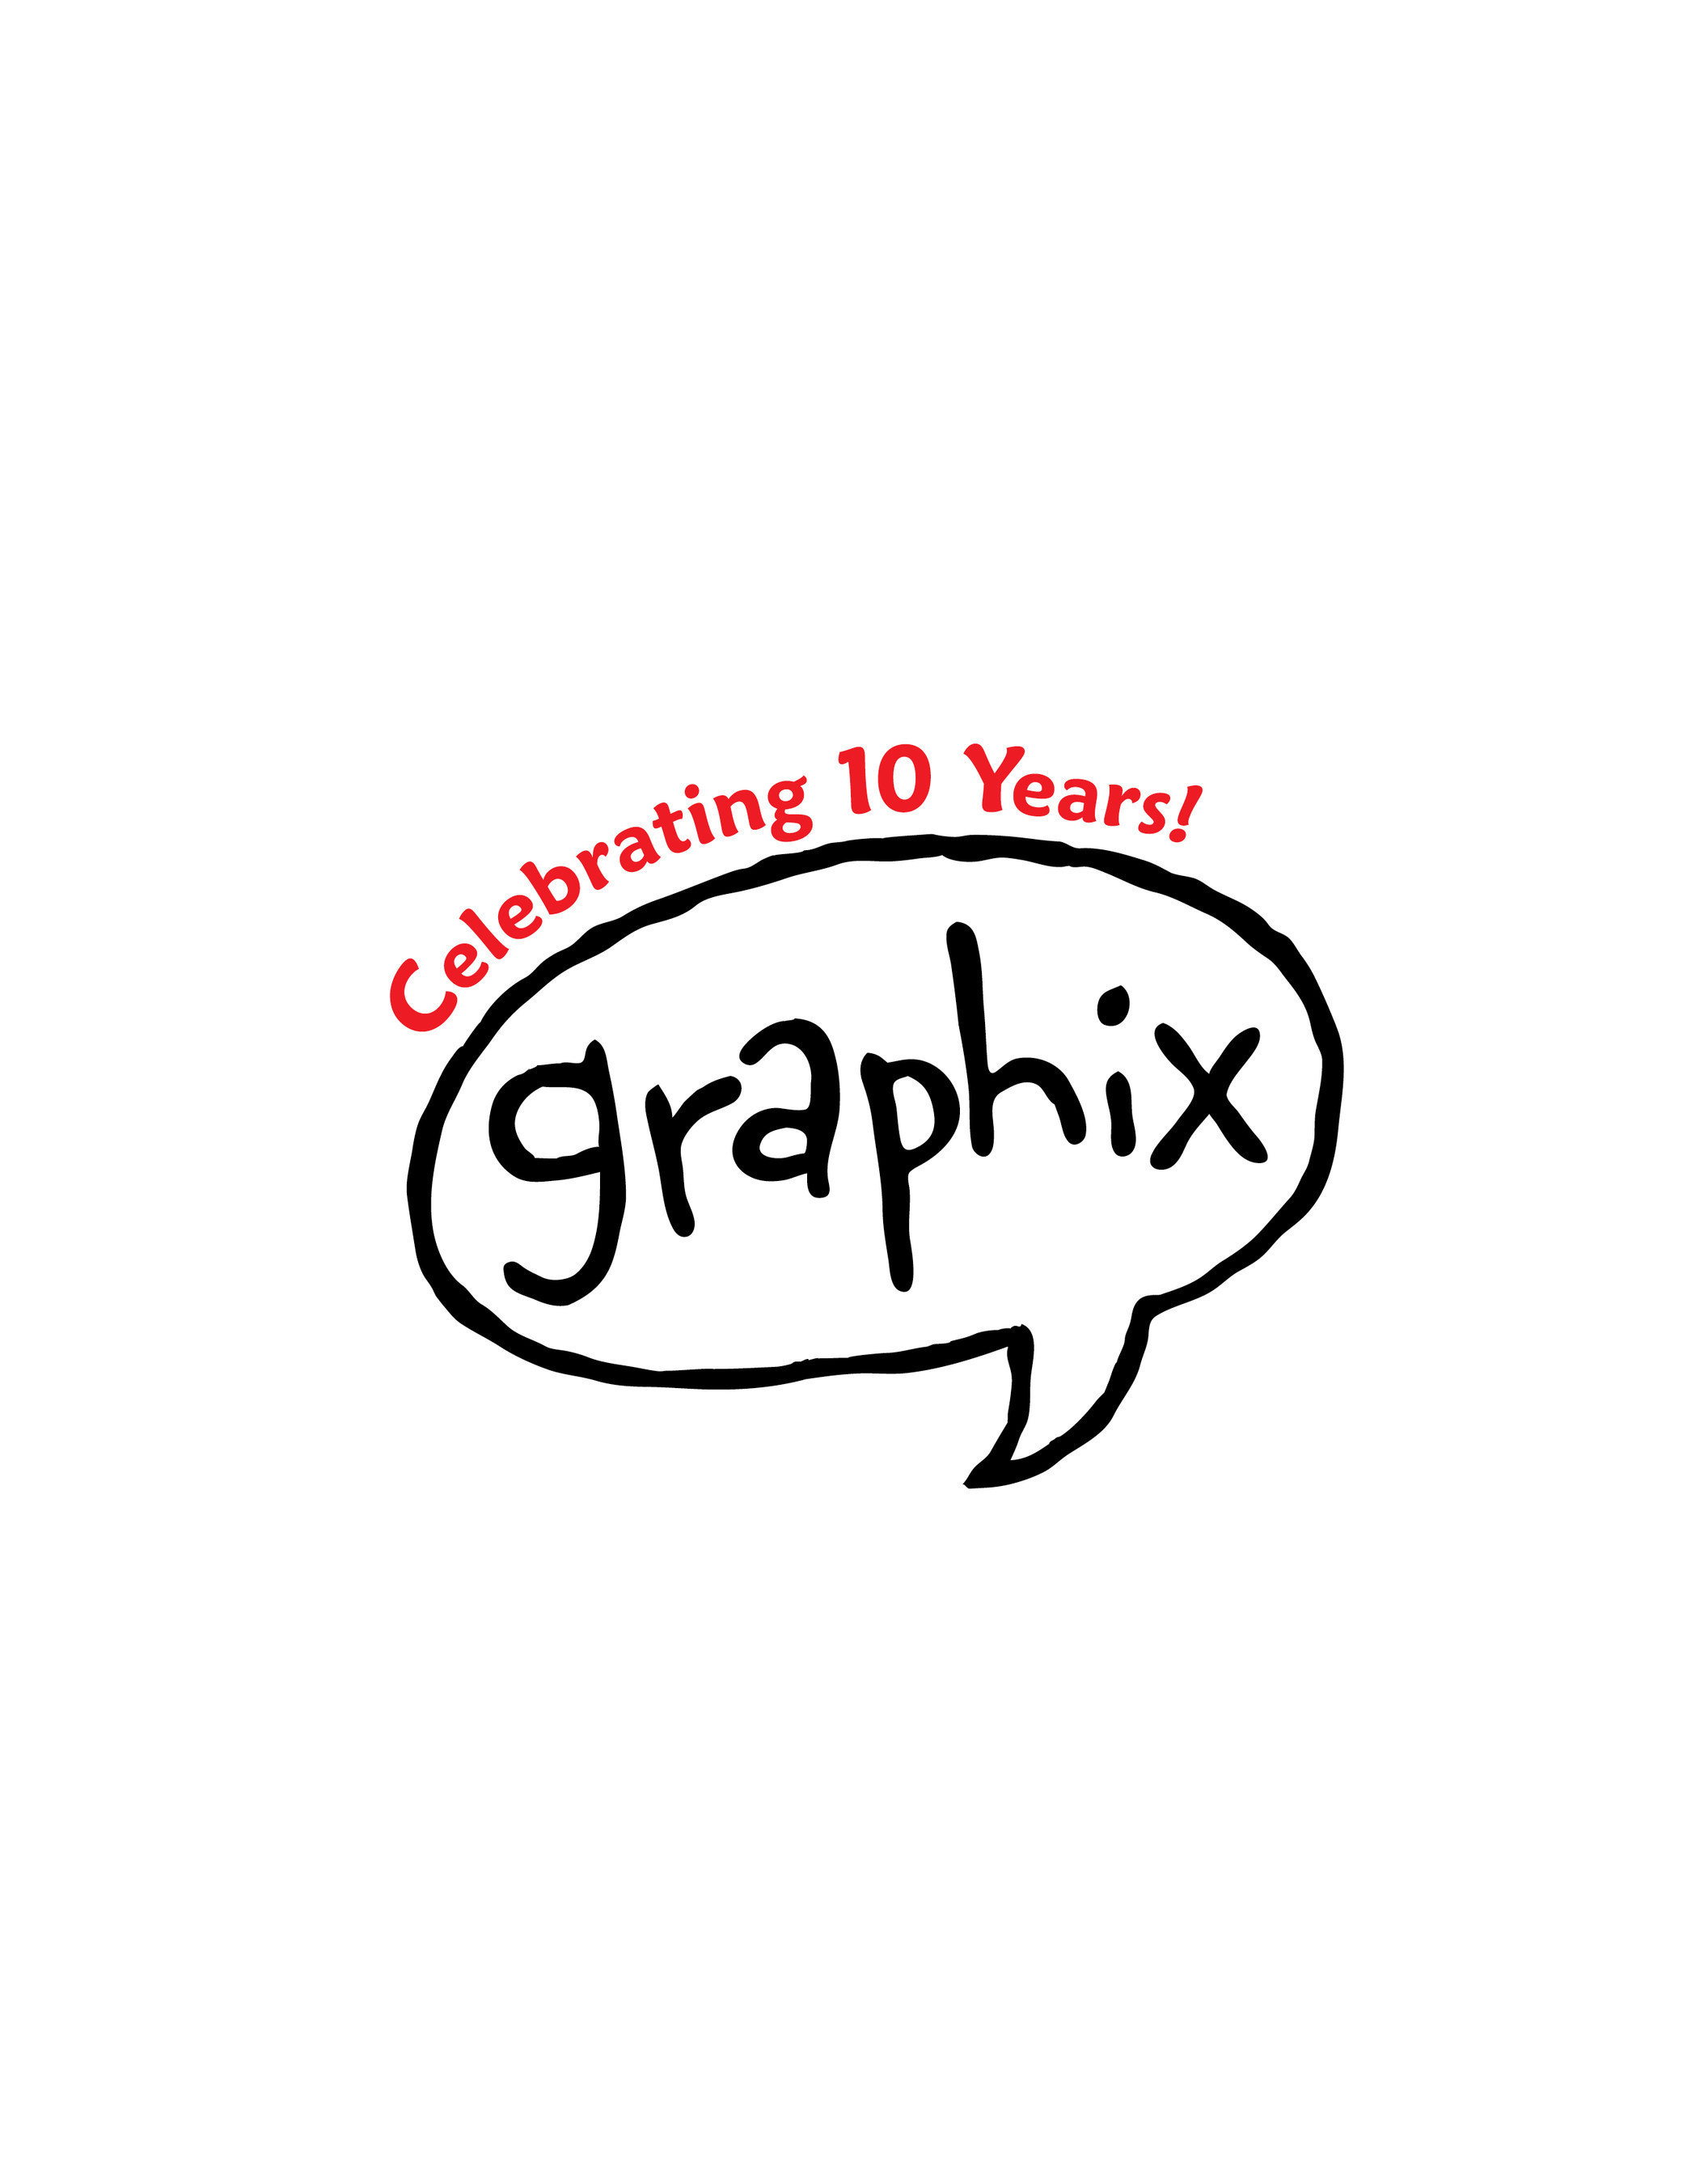 Graphix 10th Anniversary logo